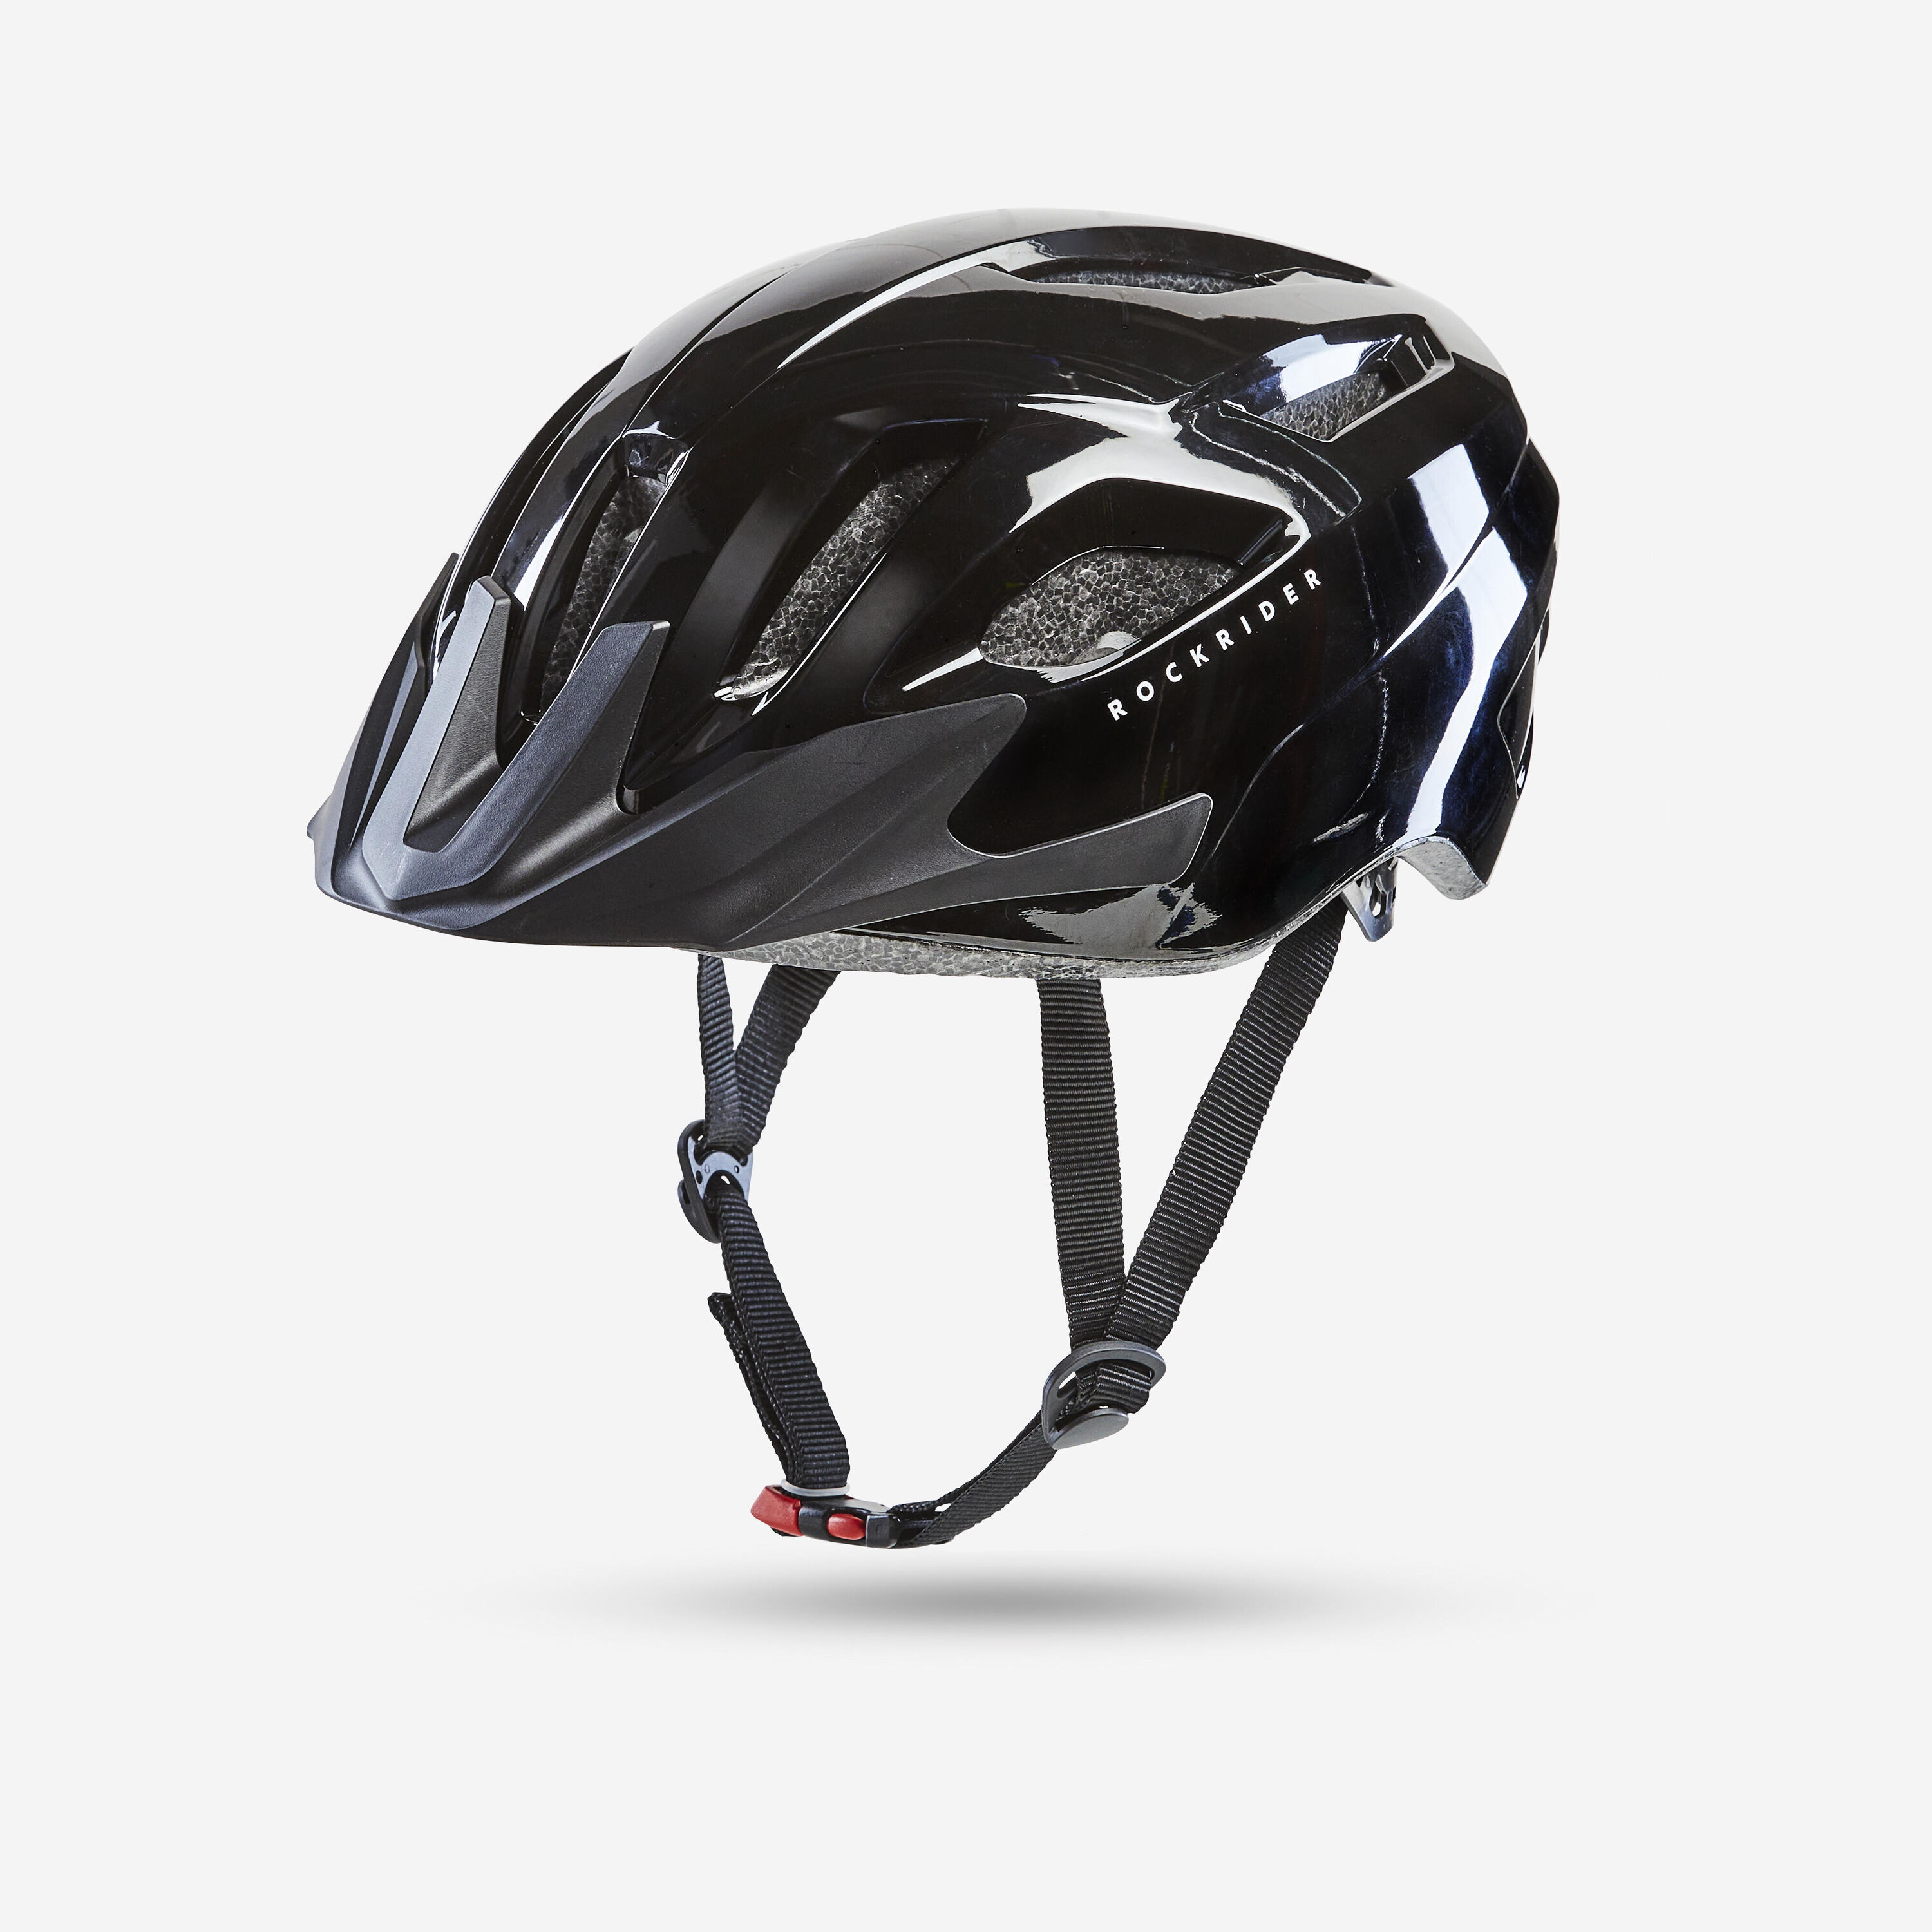 ROCKRIDER Mountain Bike Helmet EXPL 50 - Black